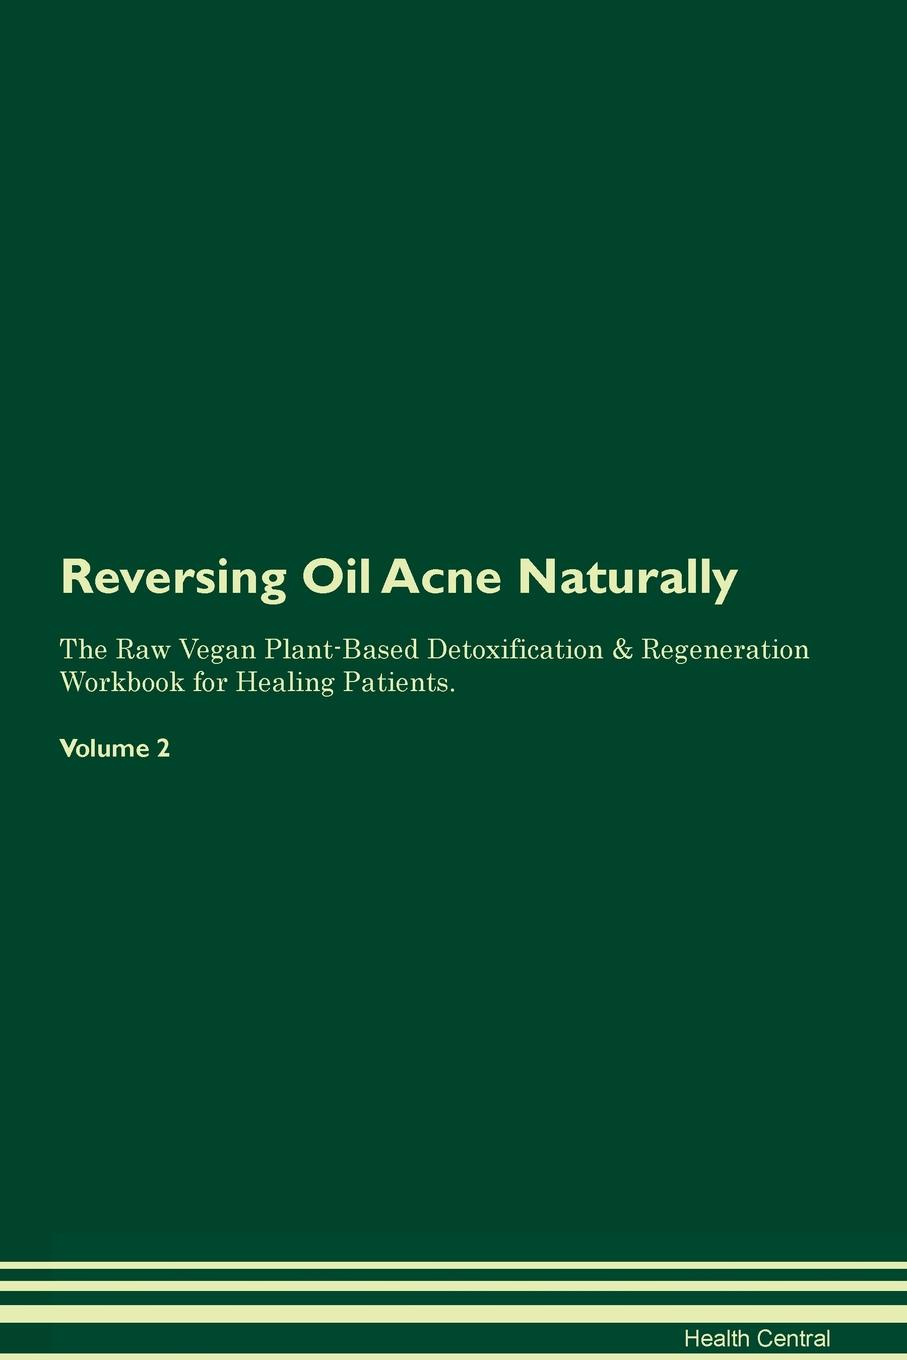 Reversing Oil Acne Naturally The Raw Vegan Plant-Based Detoxification & Regeneration Workbook for Healing Patients. Volume 2